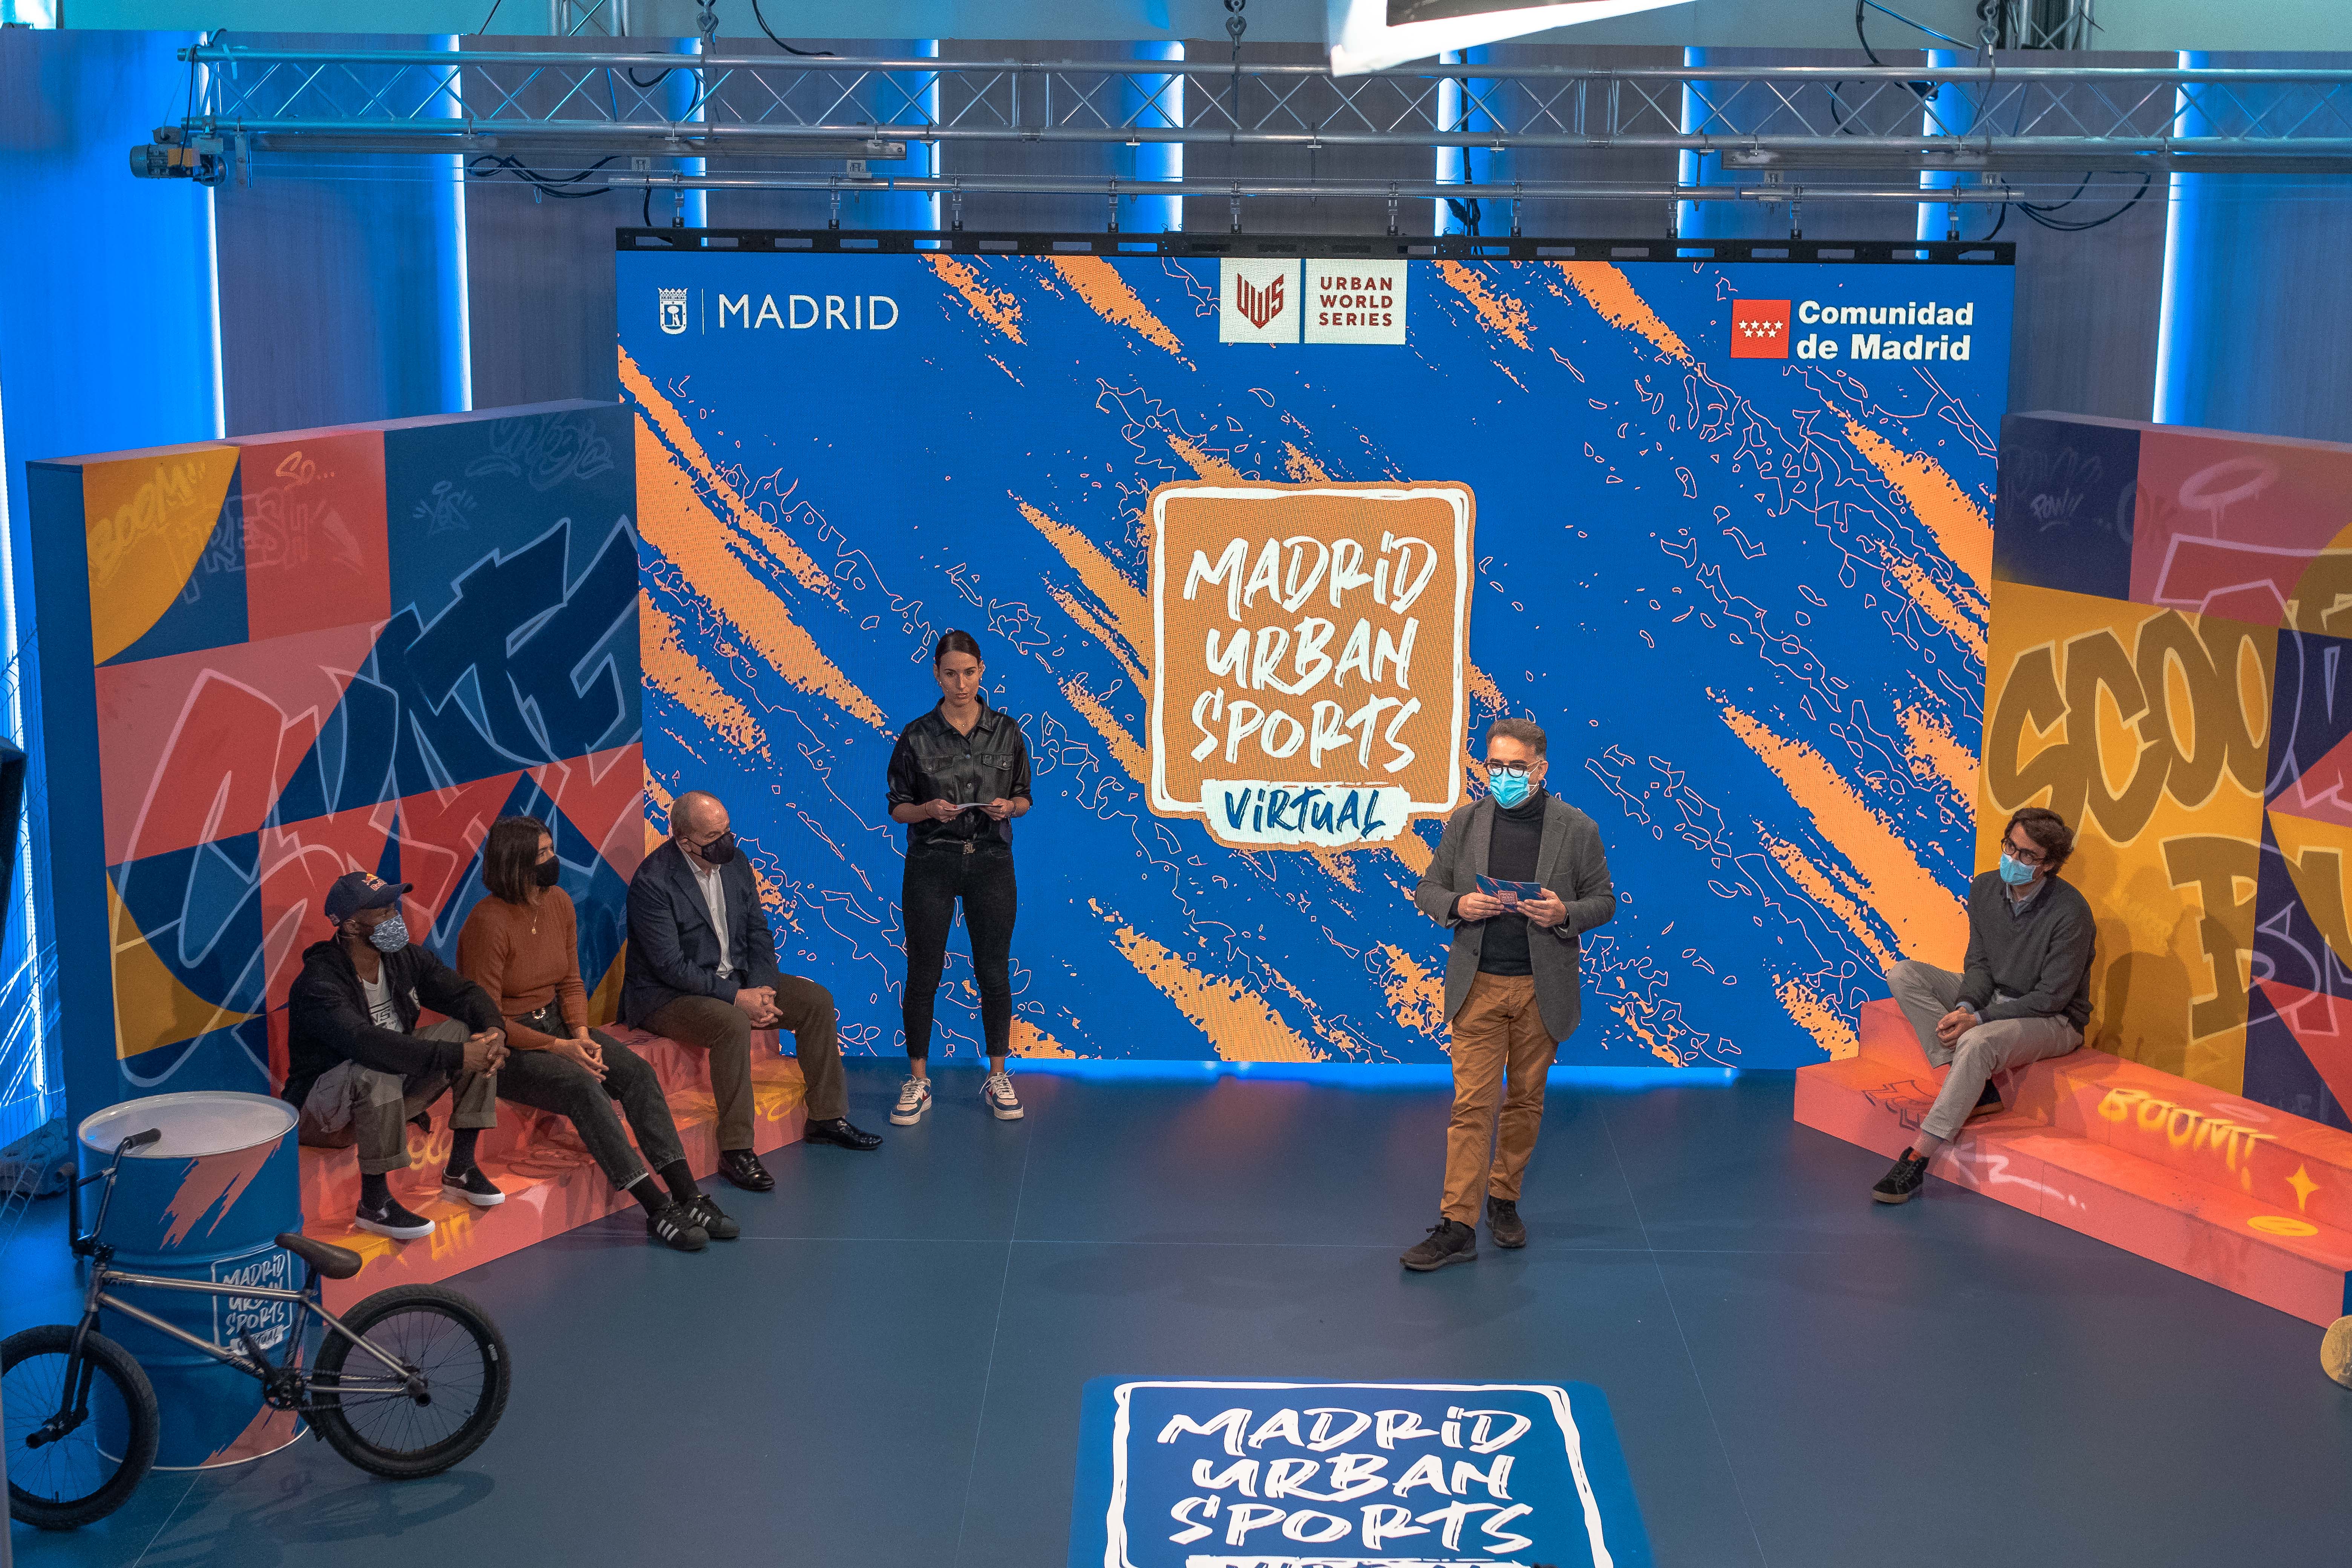 Madrid Urban Sports llega a la capital de manera virtual con las